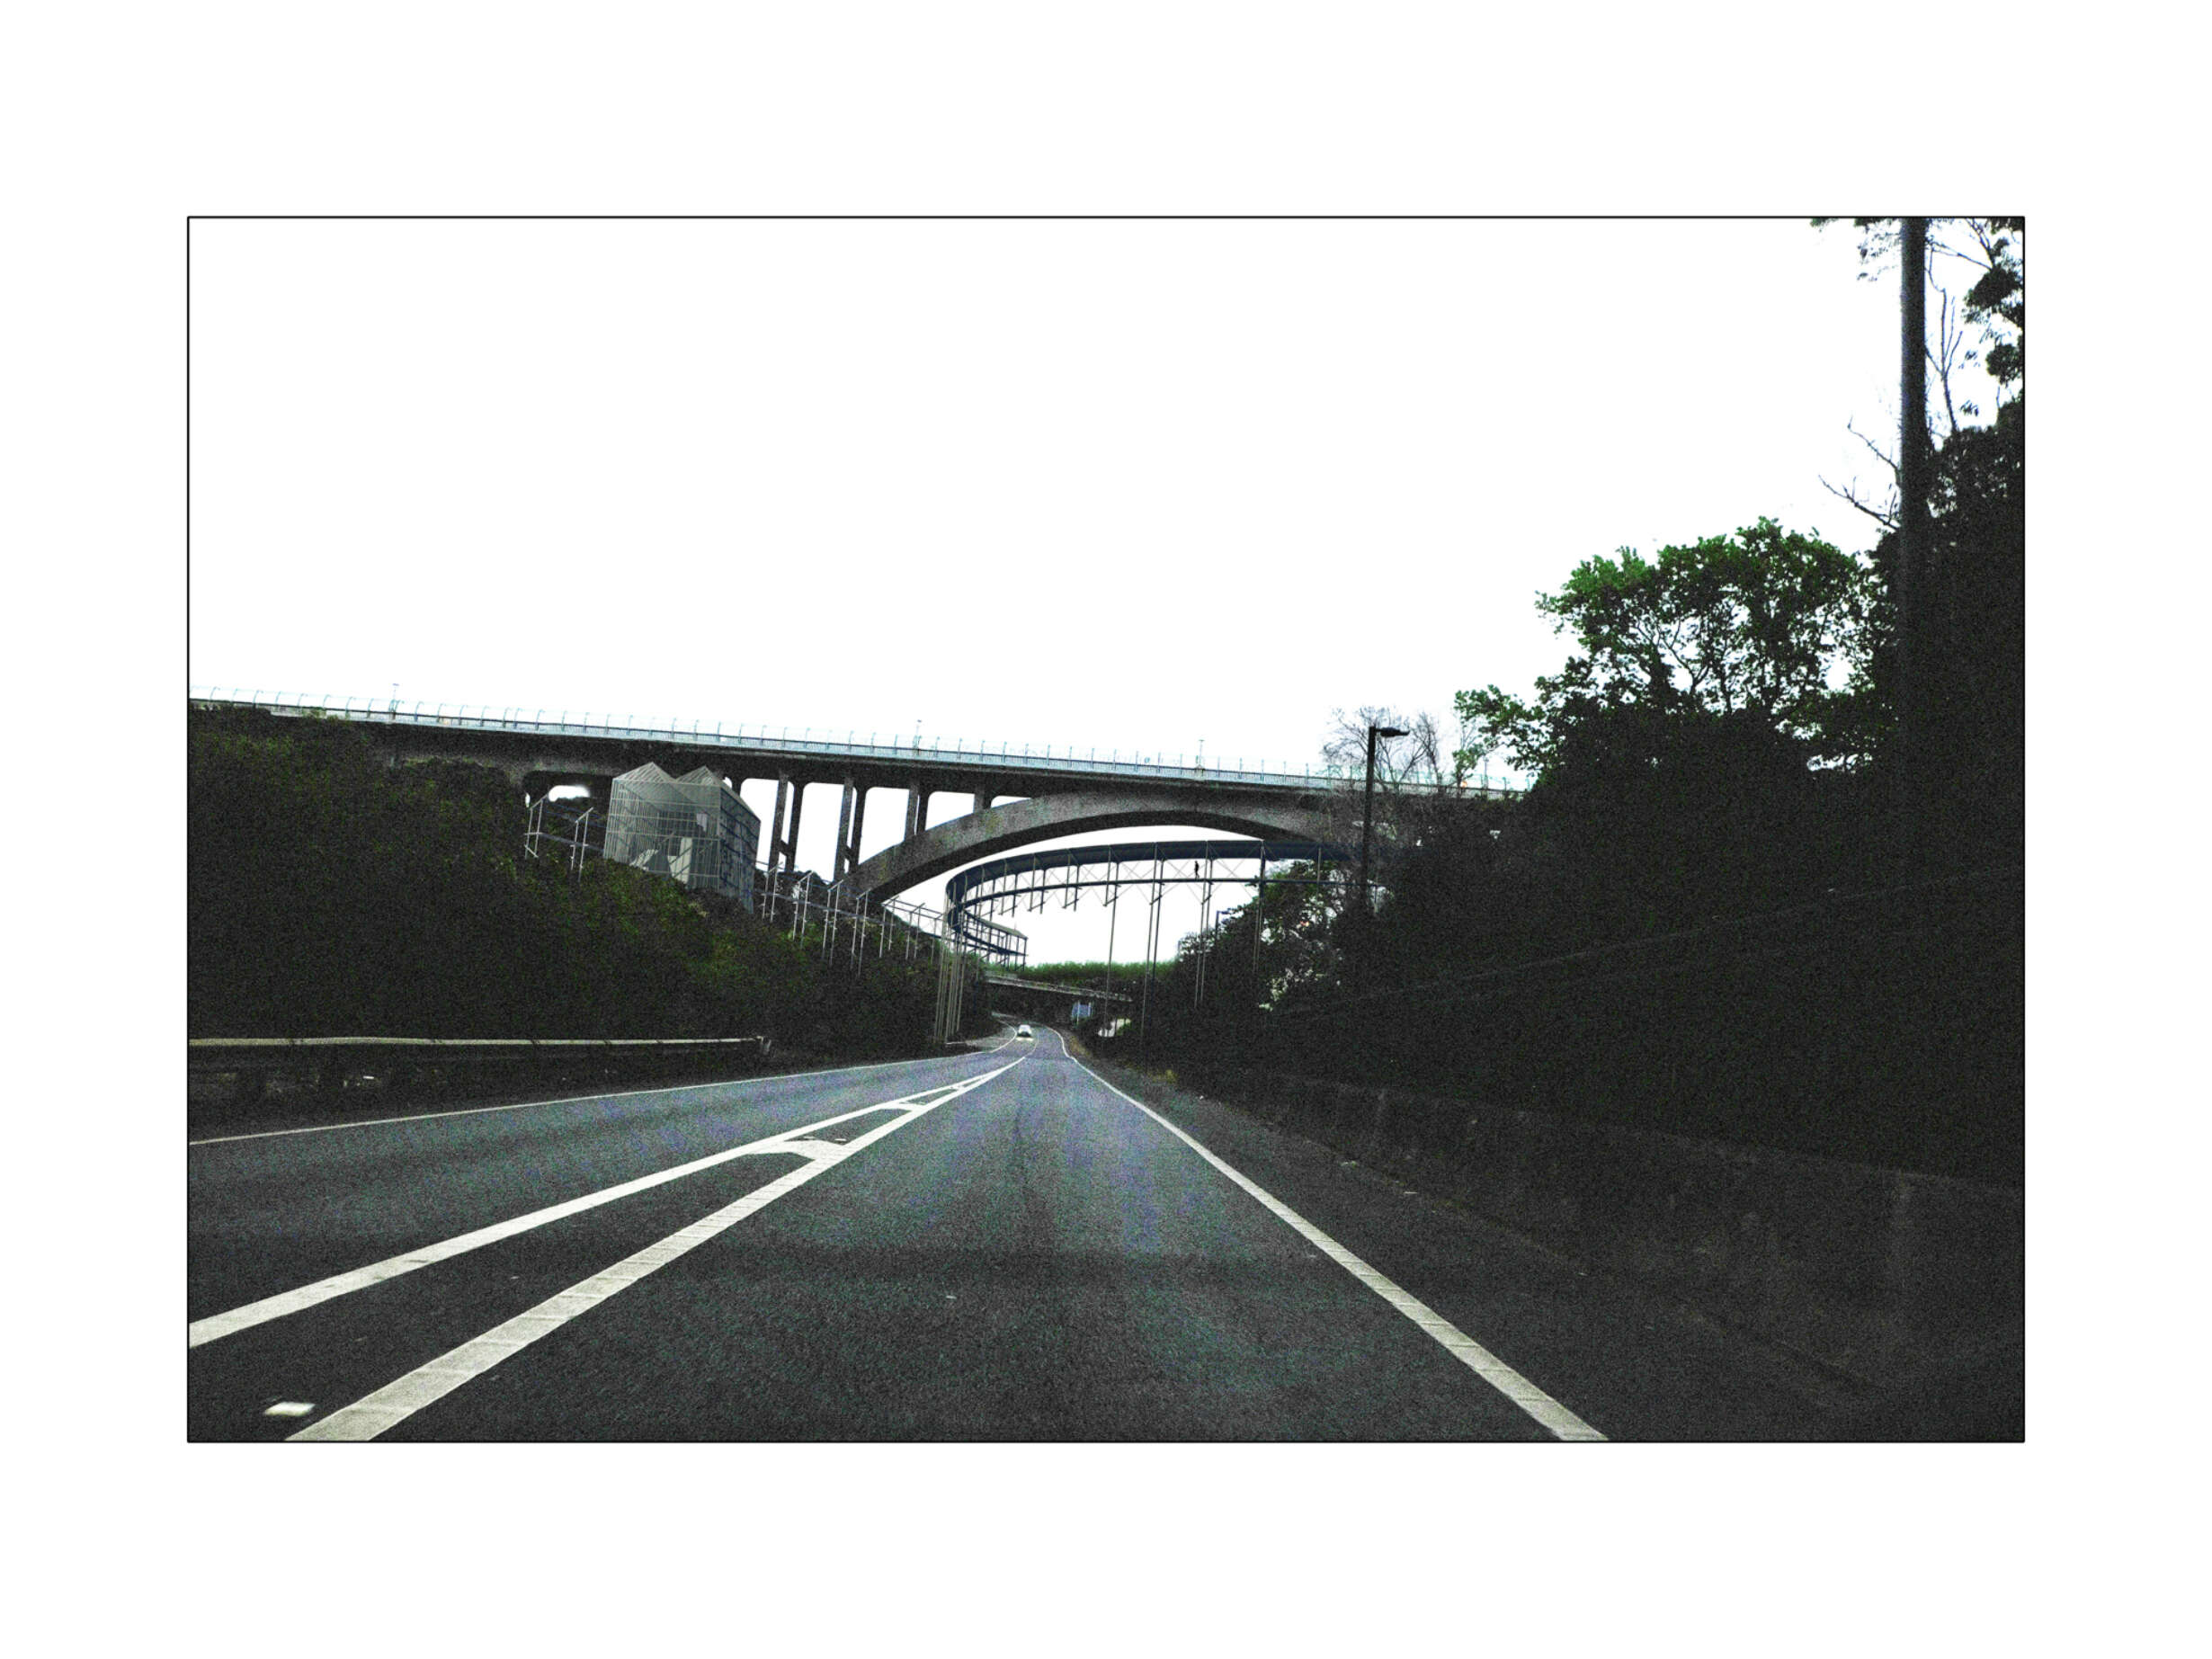 Motorist’s perspective looking south, underneath the interlocking bridges.